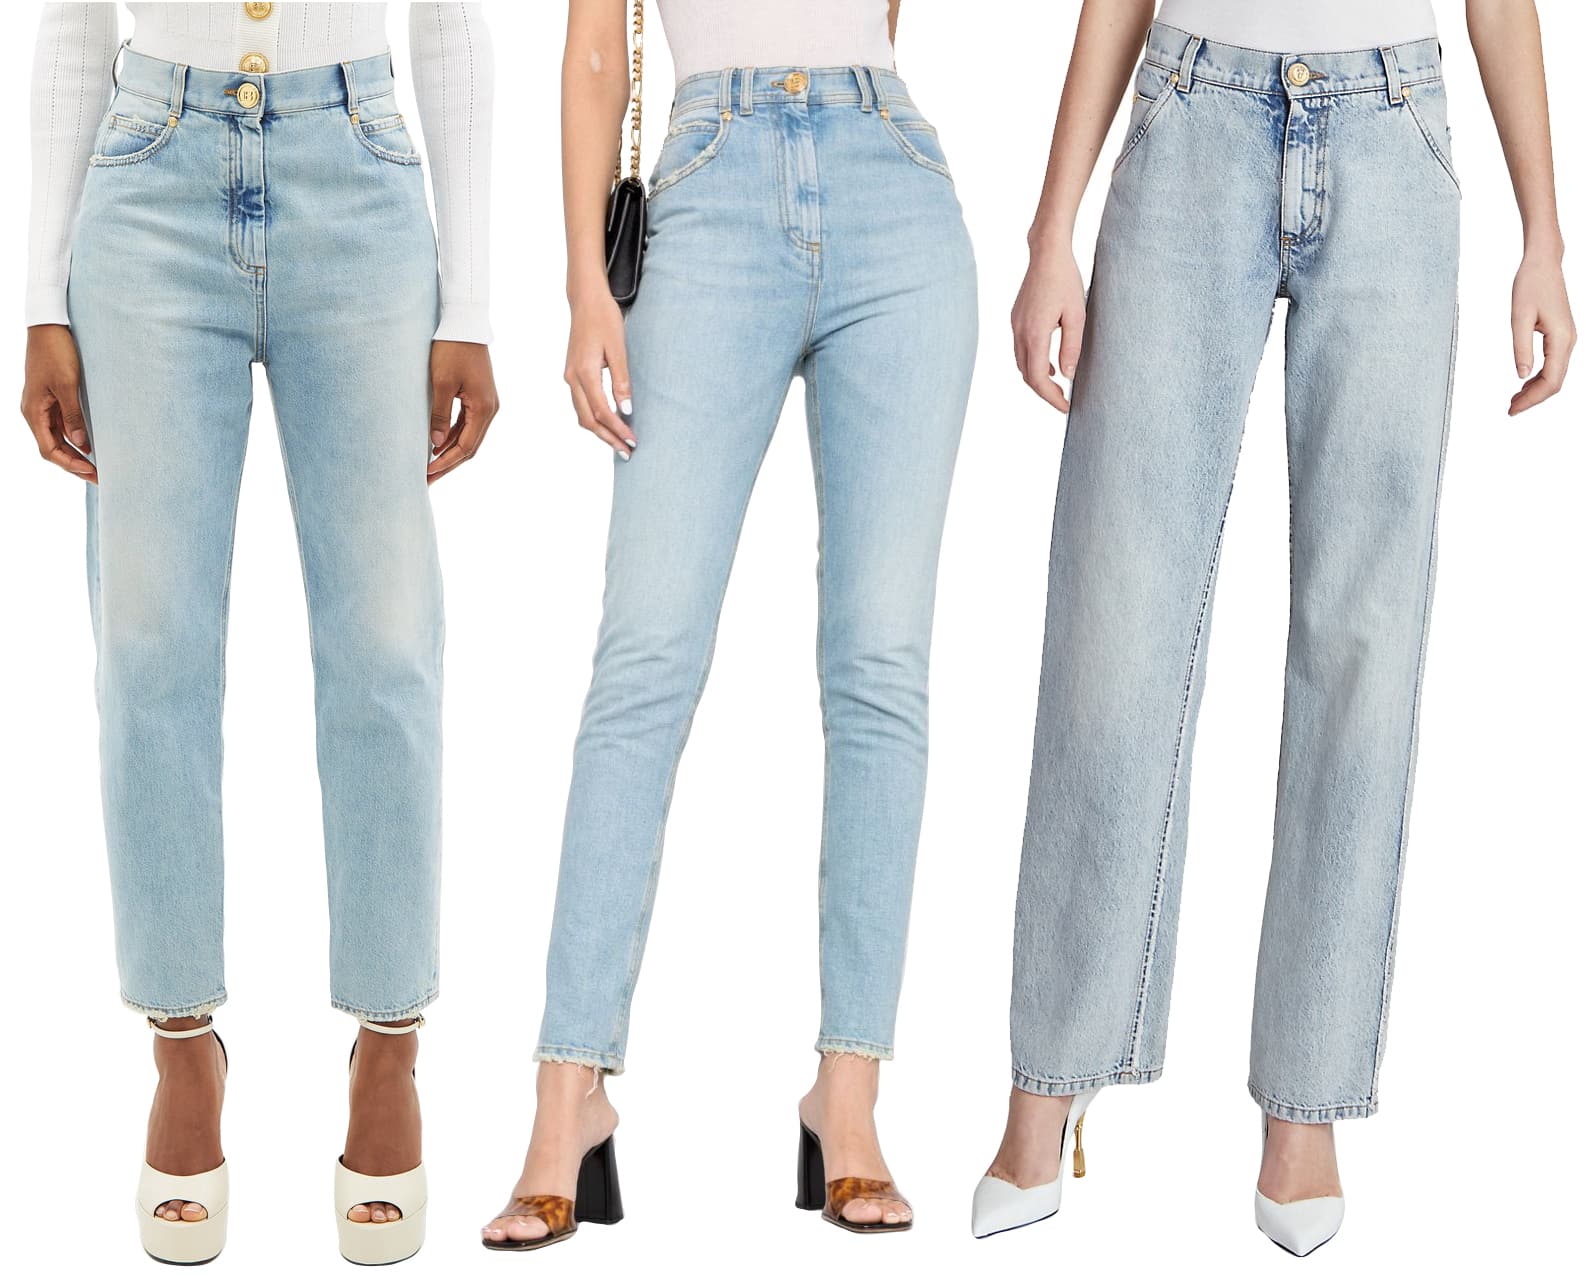 Balmain High-Rise Boyfriend Jeans; Balmain Skinny-Fit Jeans; Balmain Vintage-Inspired Straight-Leg Jeans